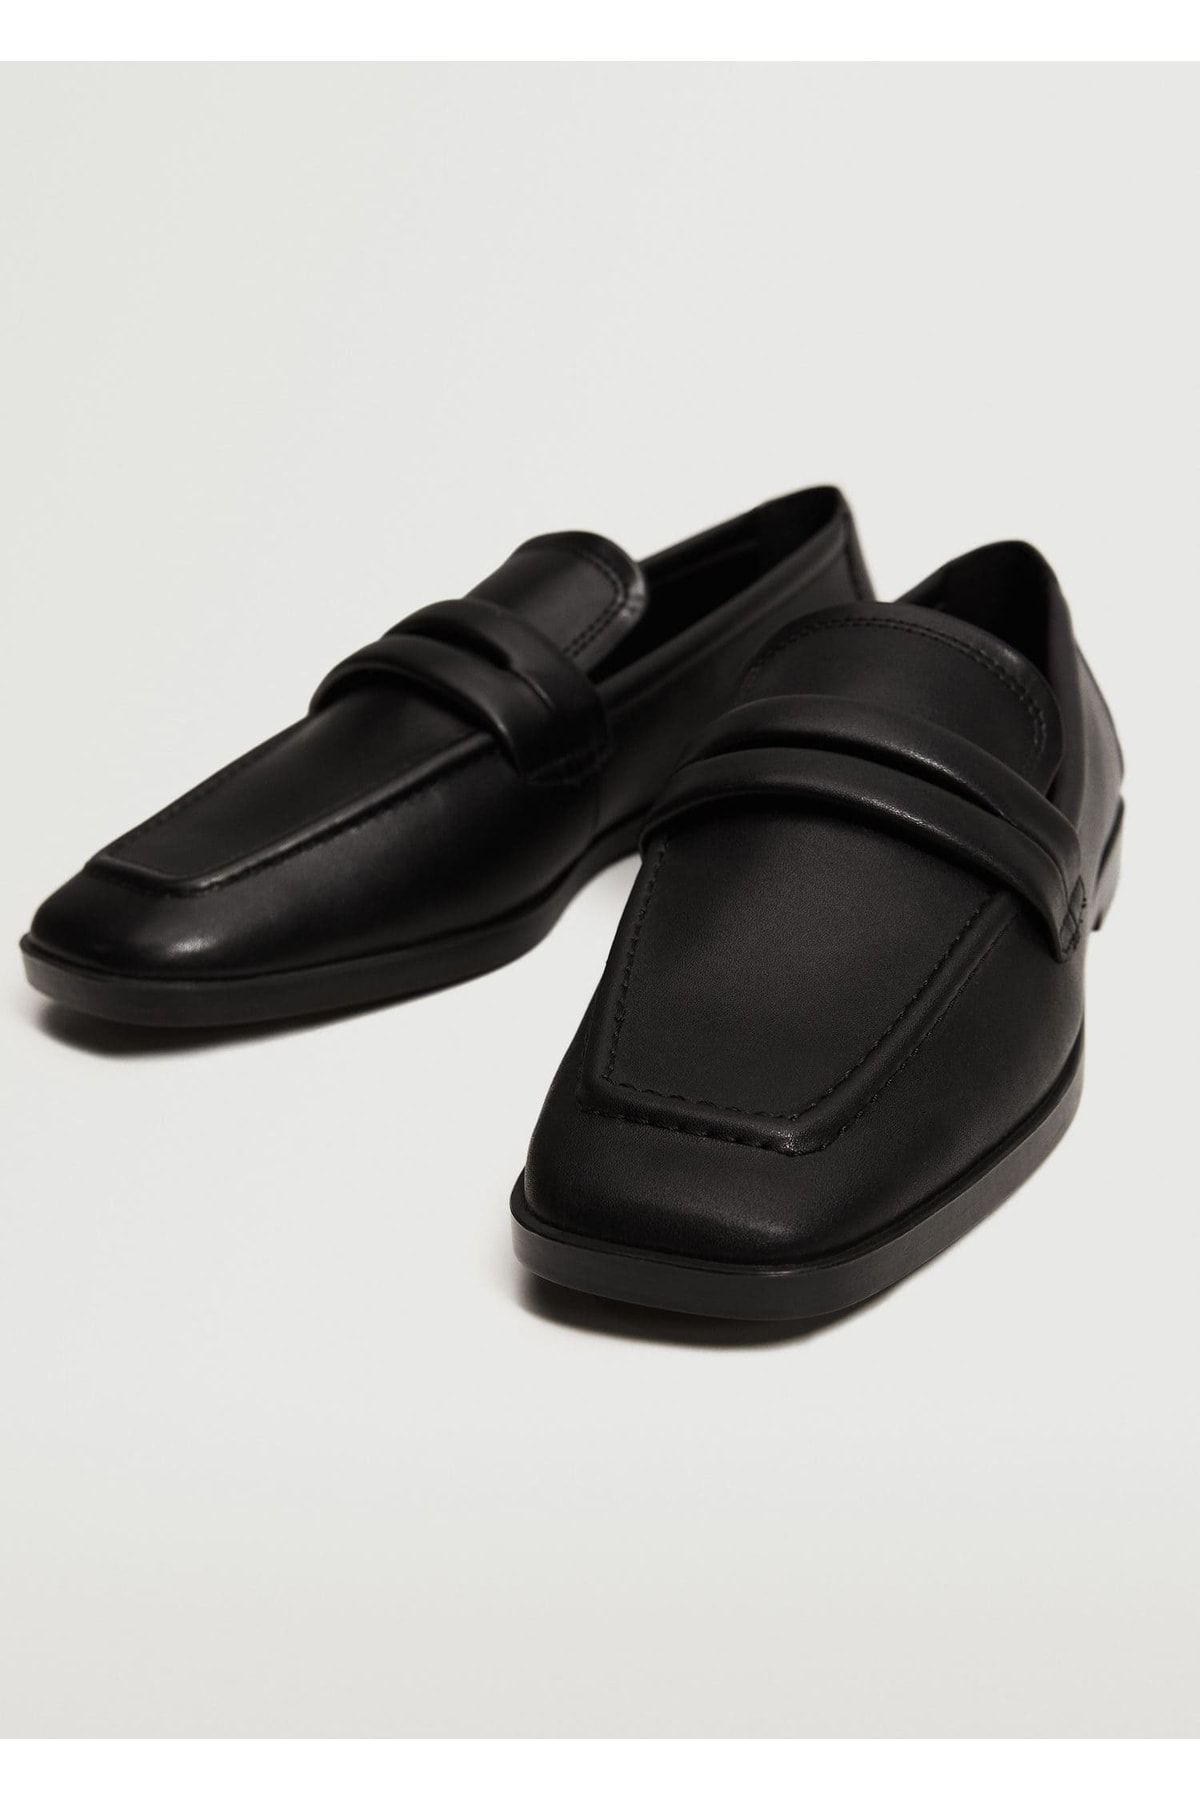 MANGO Siyah Kare Uçlu Loafer Ayakkabı